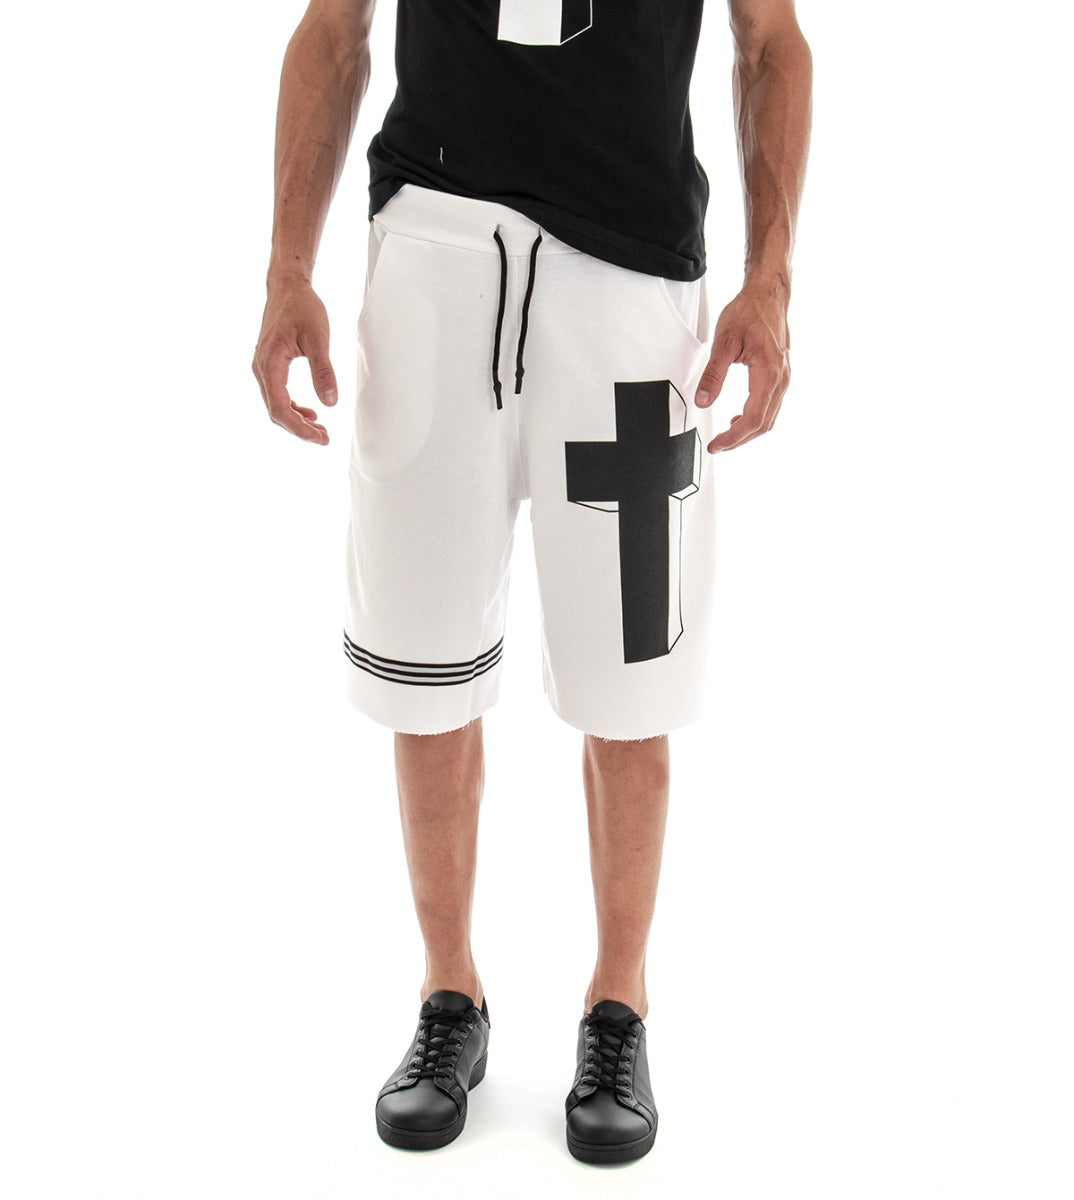 Bermuda Shorts Men's Short White Elastic Cross Print GIOSAL-PC1507A